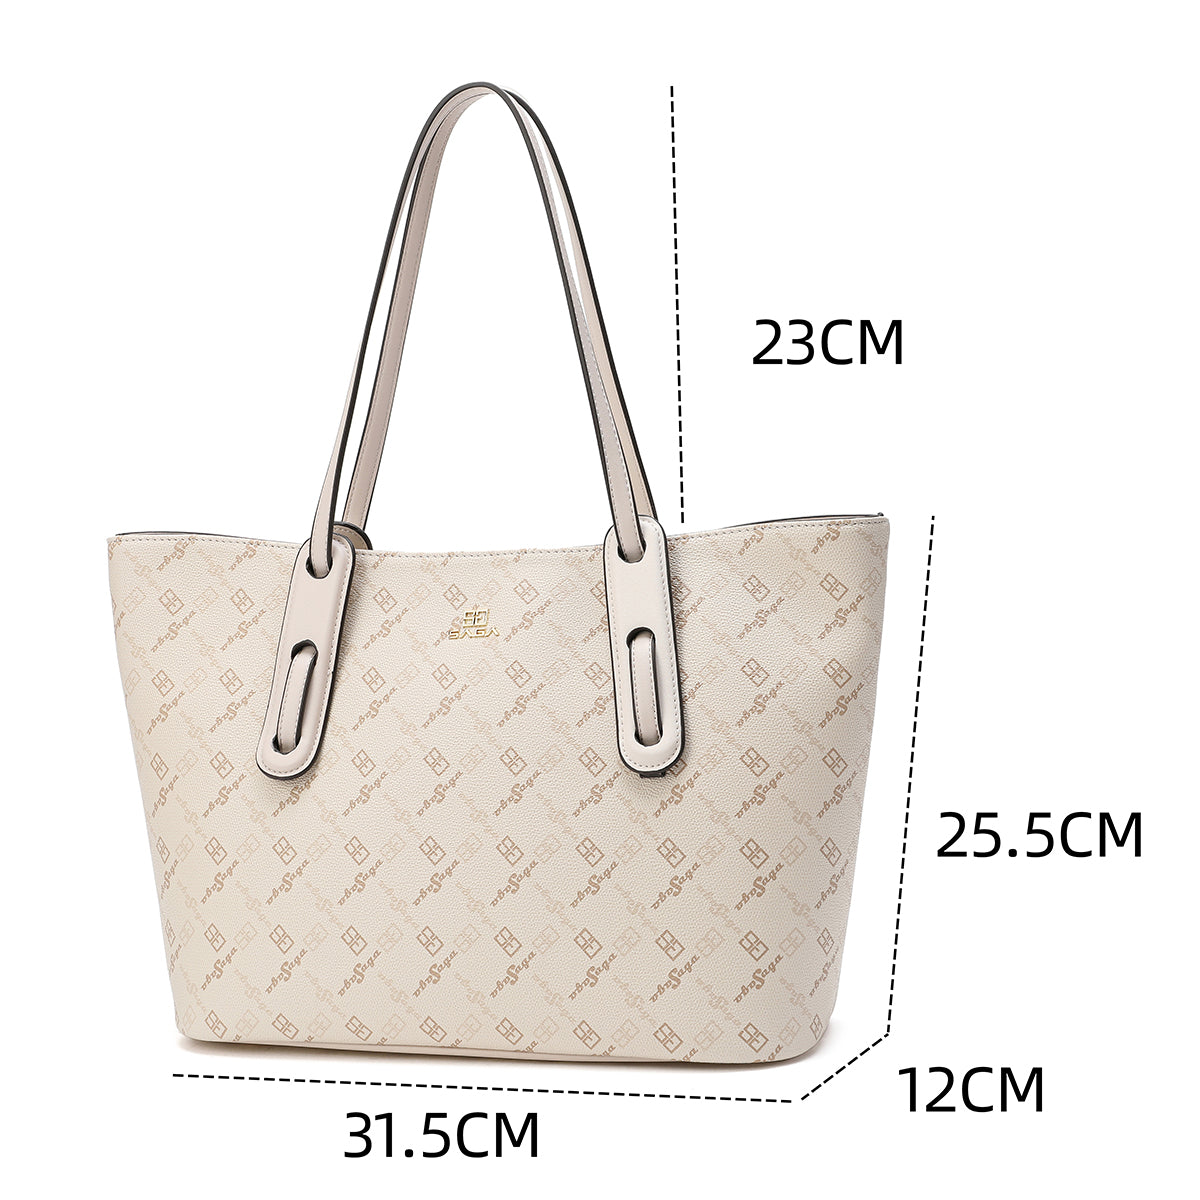 Wide and elegant handbag, width 31.5 cm, brown or cream color